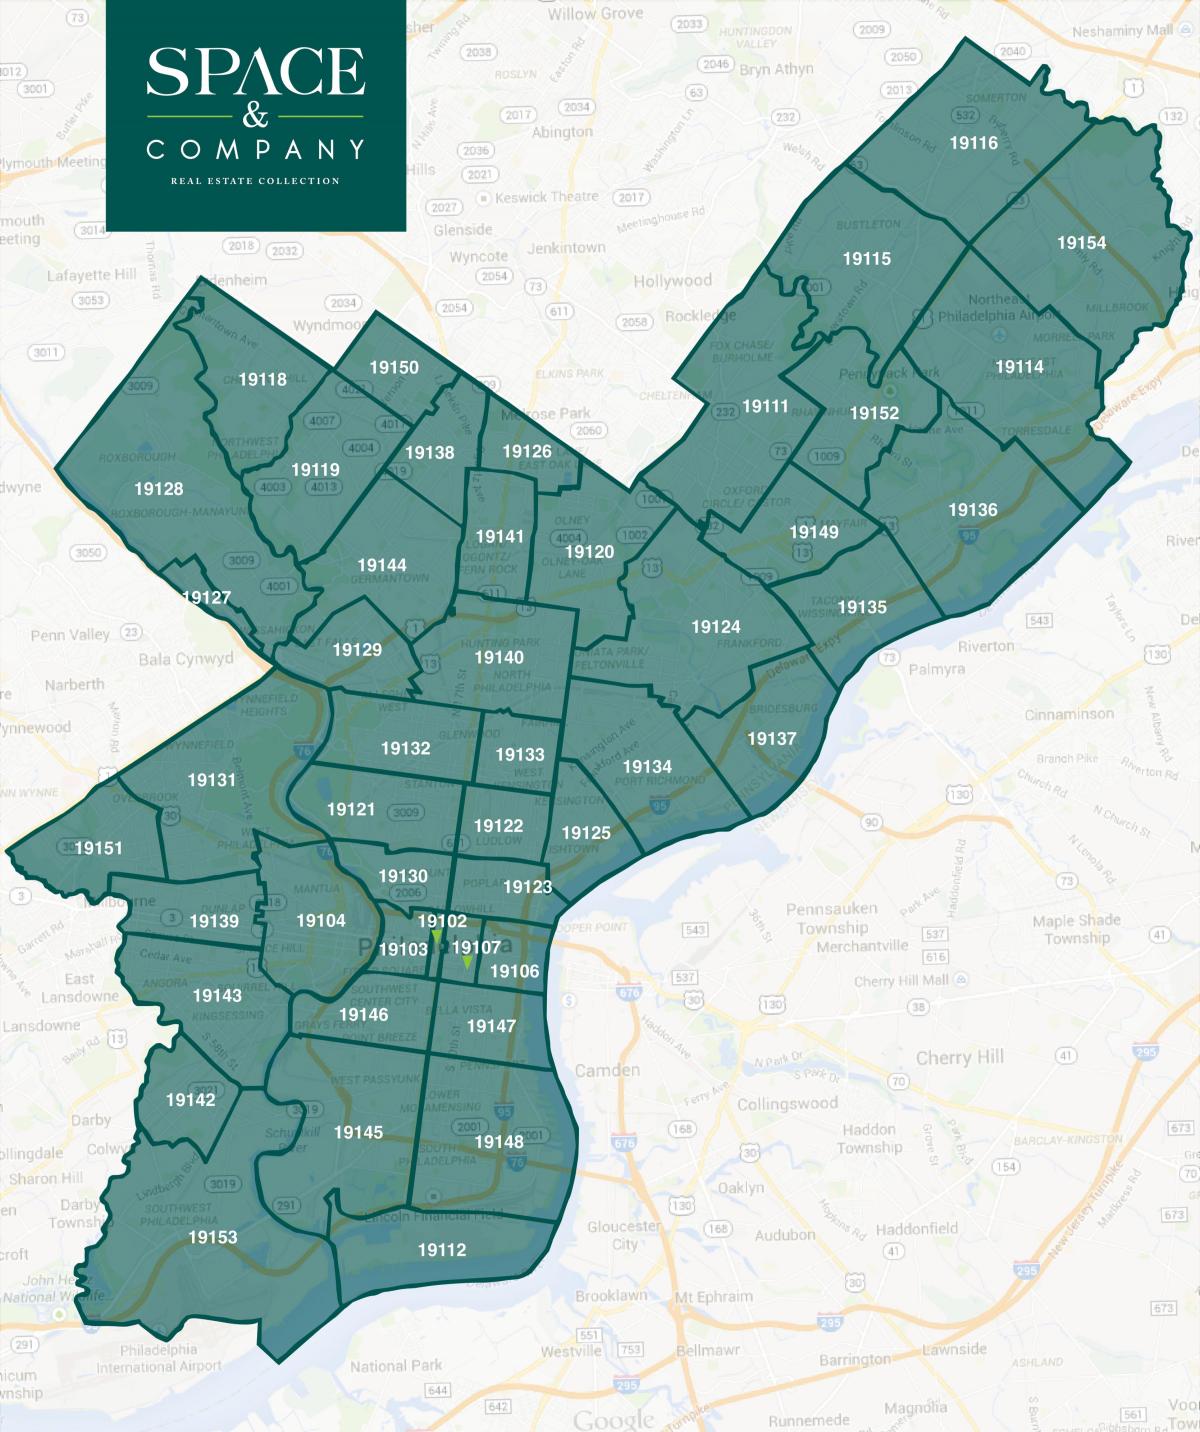 поштенски код карта на Филаделфија